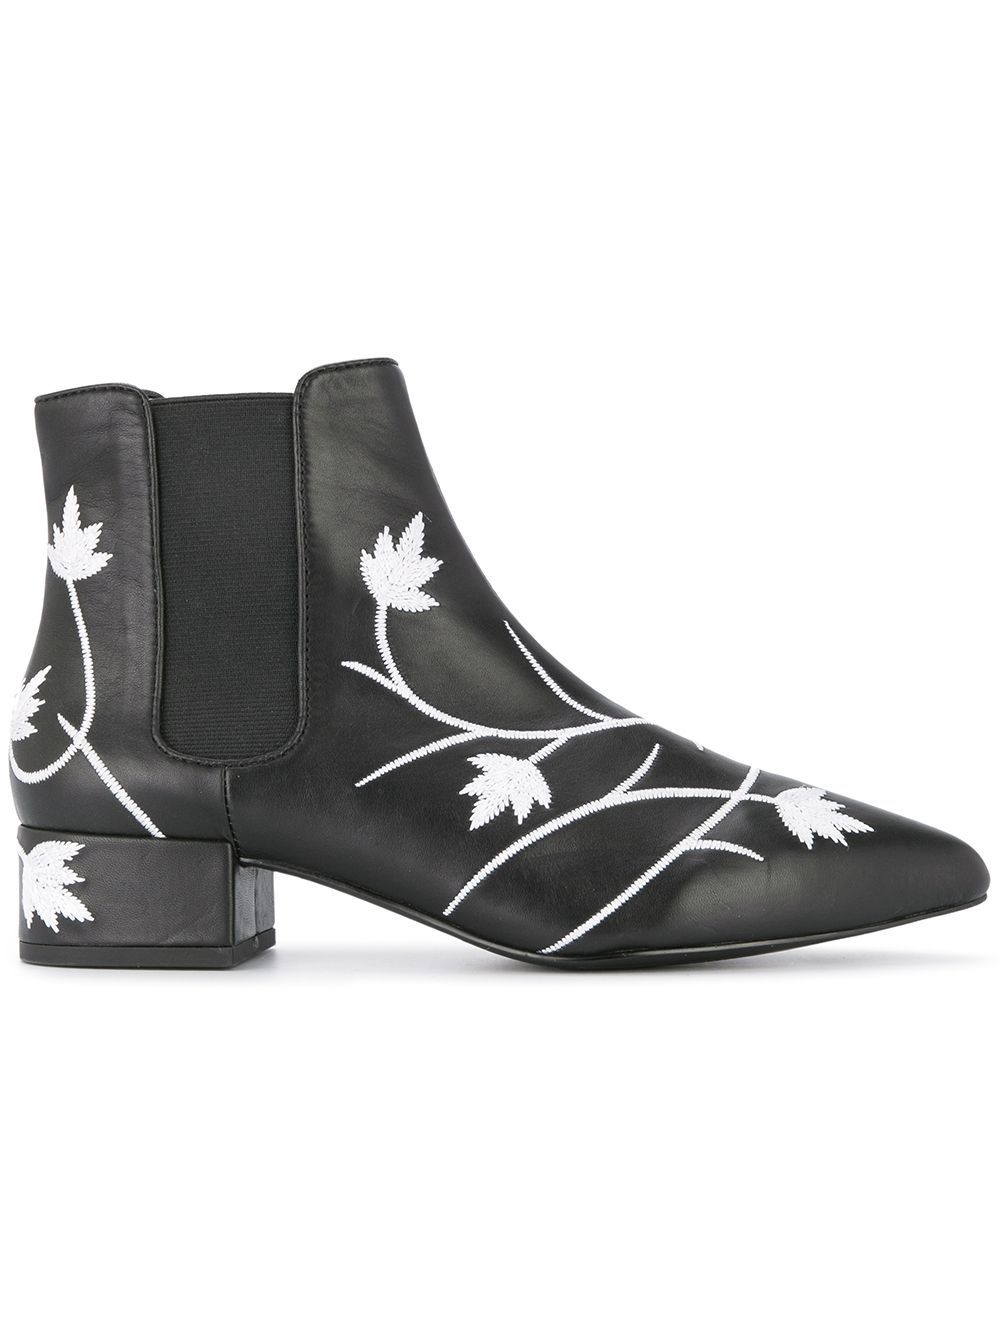 Senso Kaia I floral boots - Black | FarFetch US